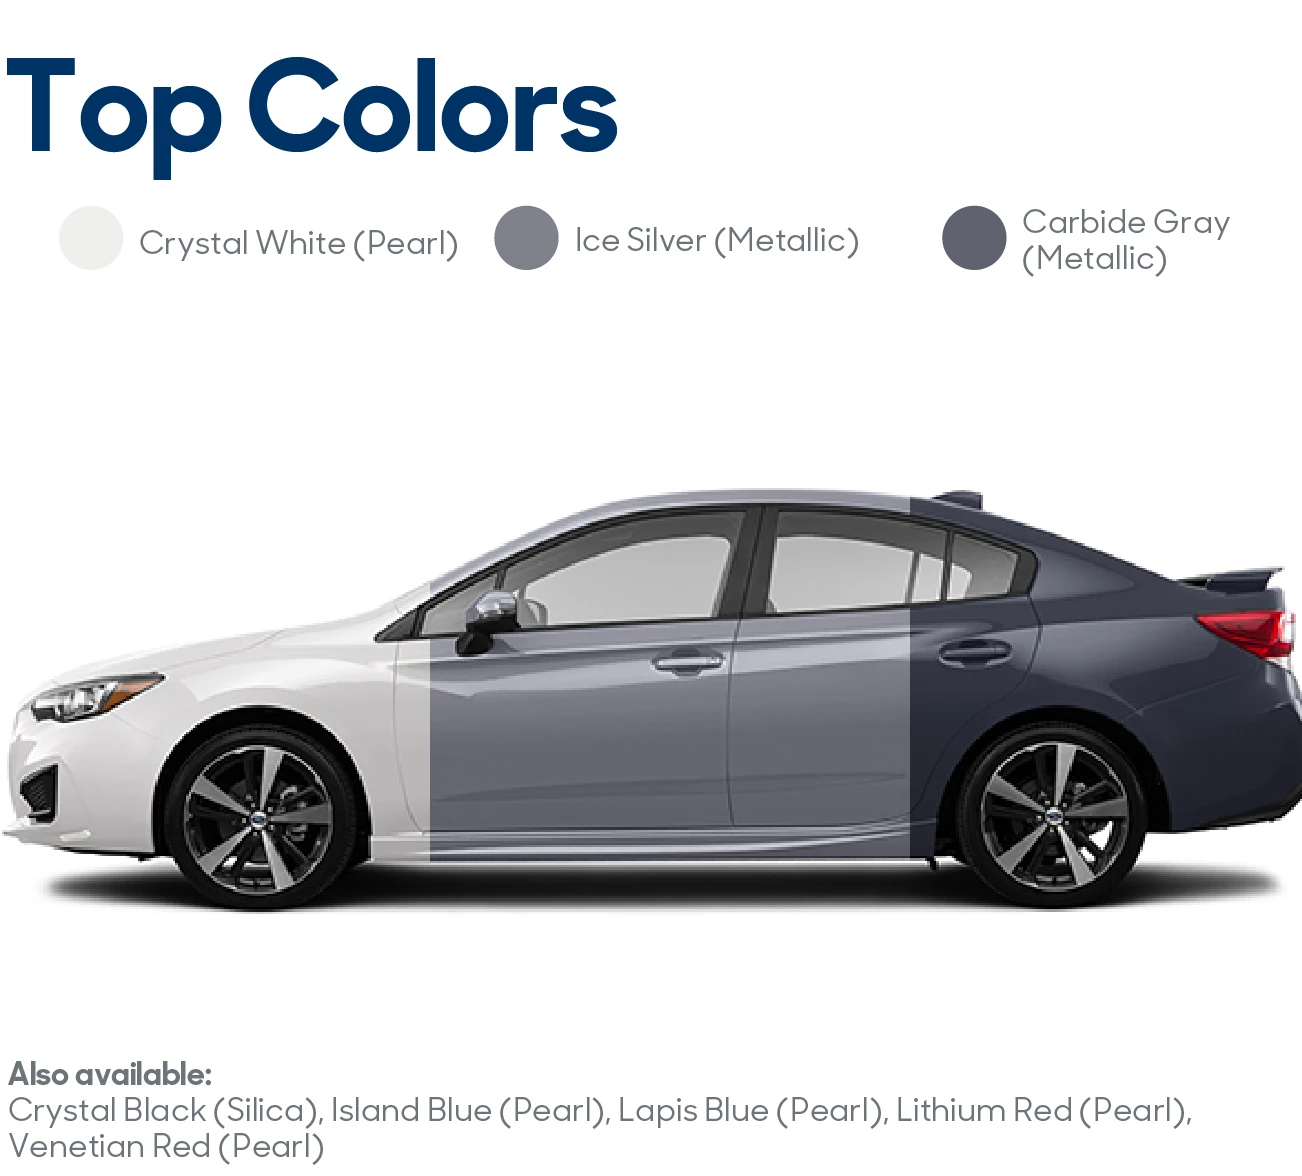 2017 Subaru Impreza Review: Available Colors | CarMax